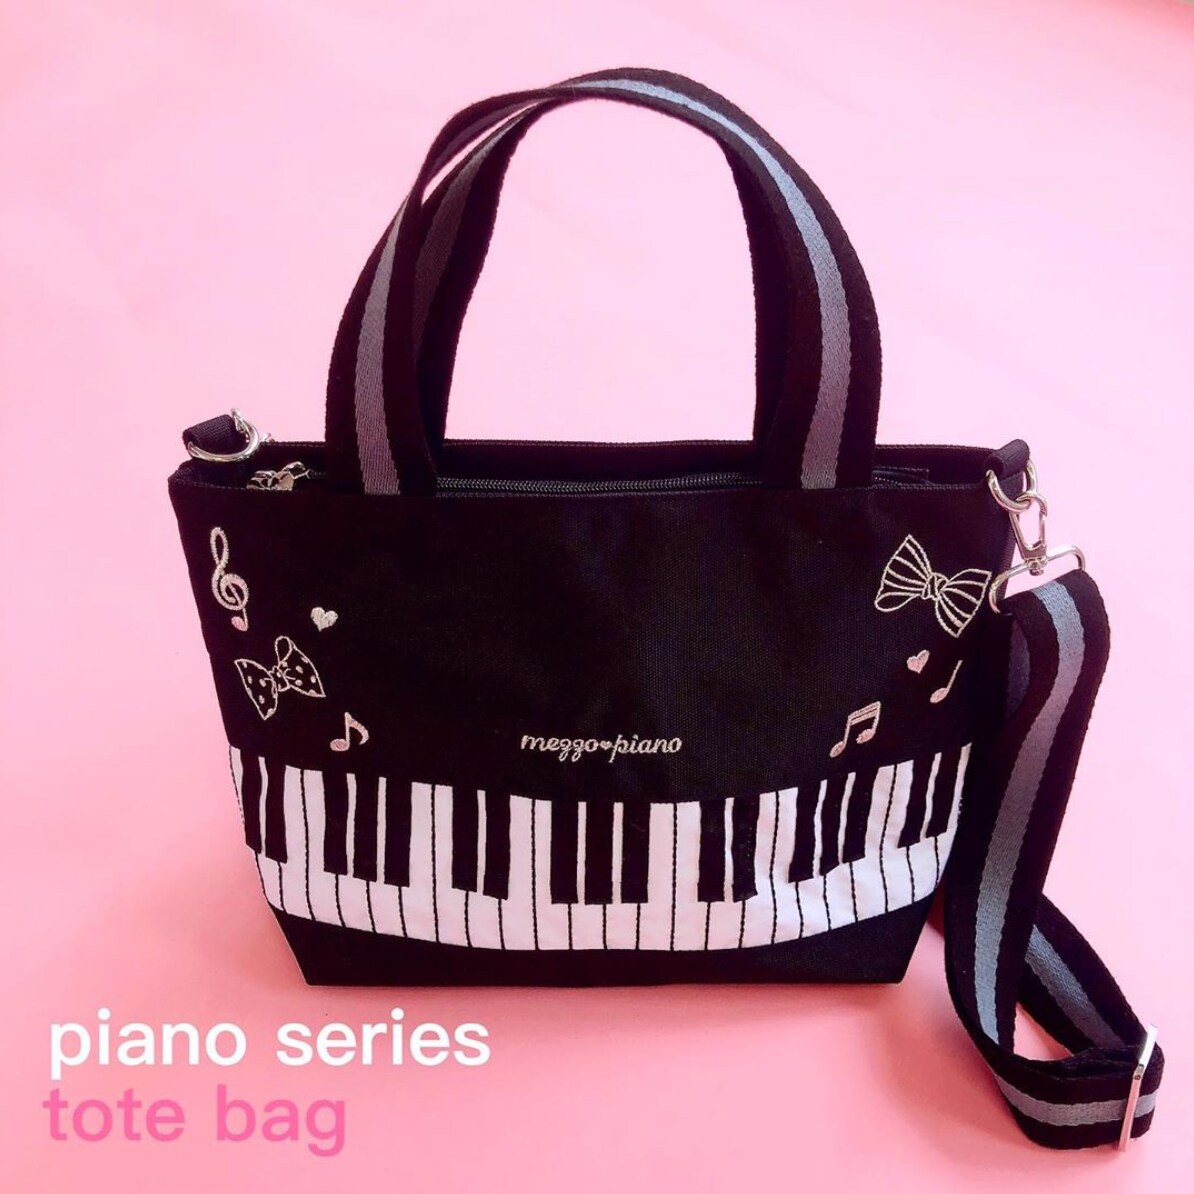 mezzo piano(メゾピアノ)公式通販サイト | NARUMIYA ONLINE | ナルミヤオンライン